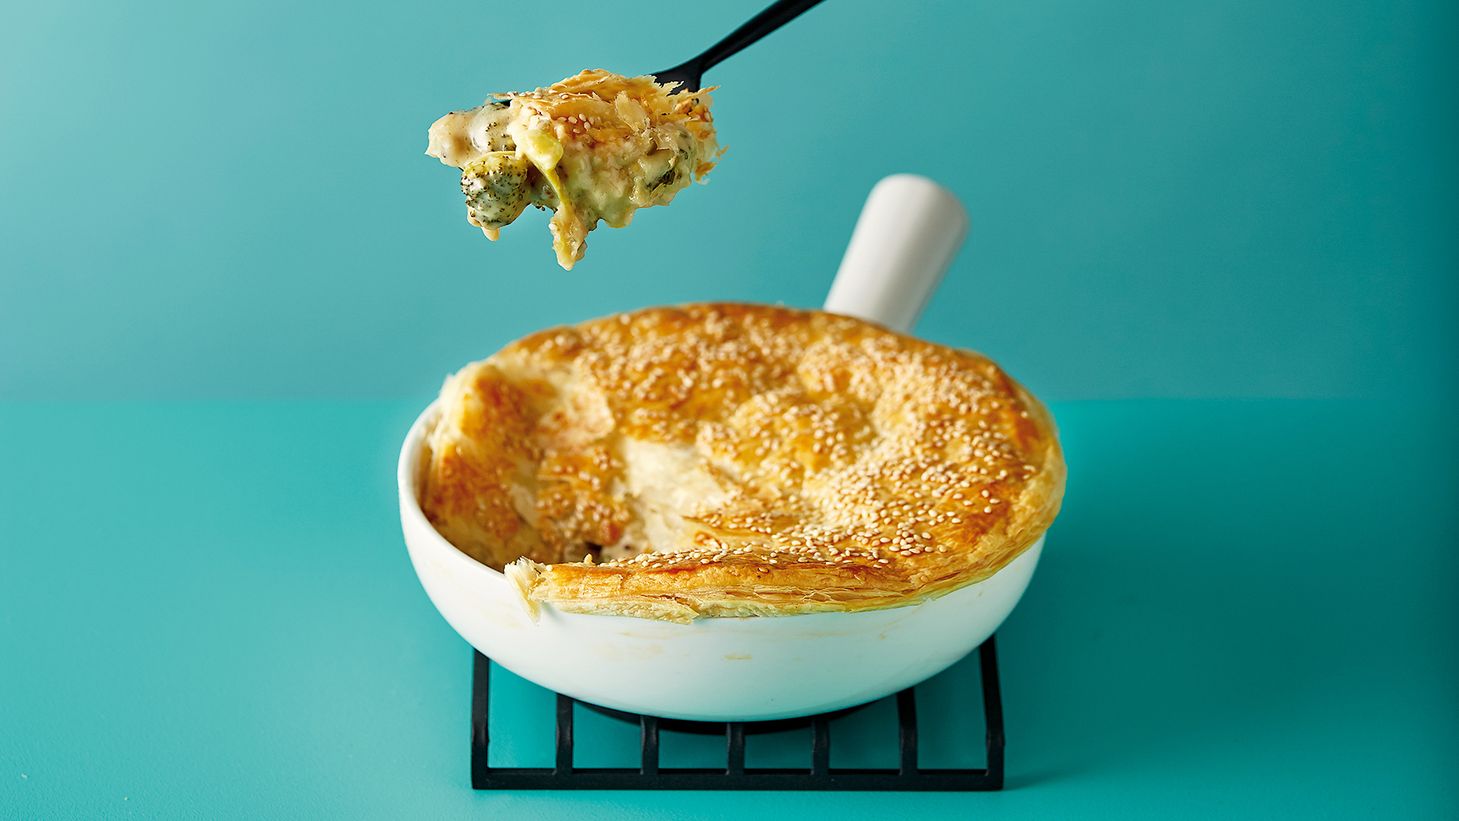 Broccoli and cheddar pot pie